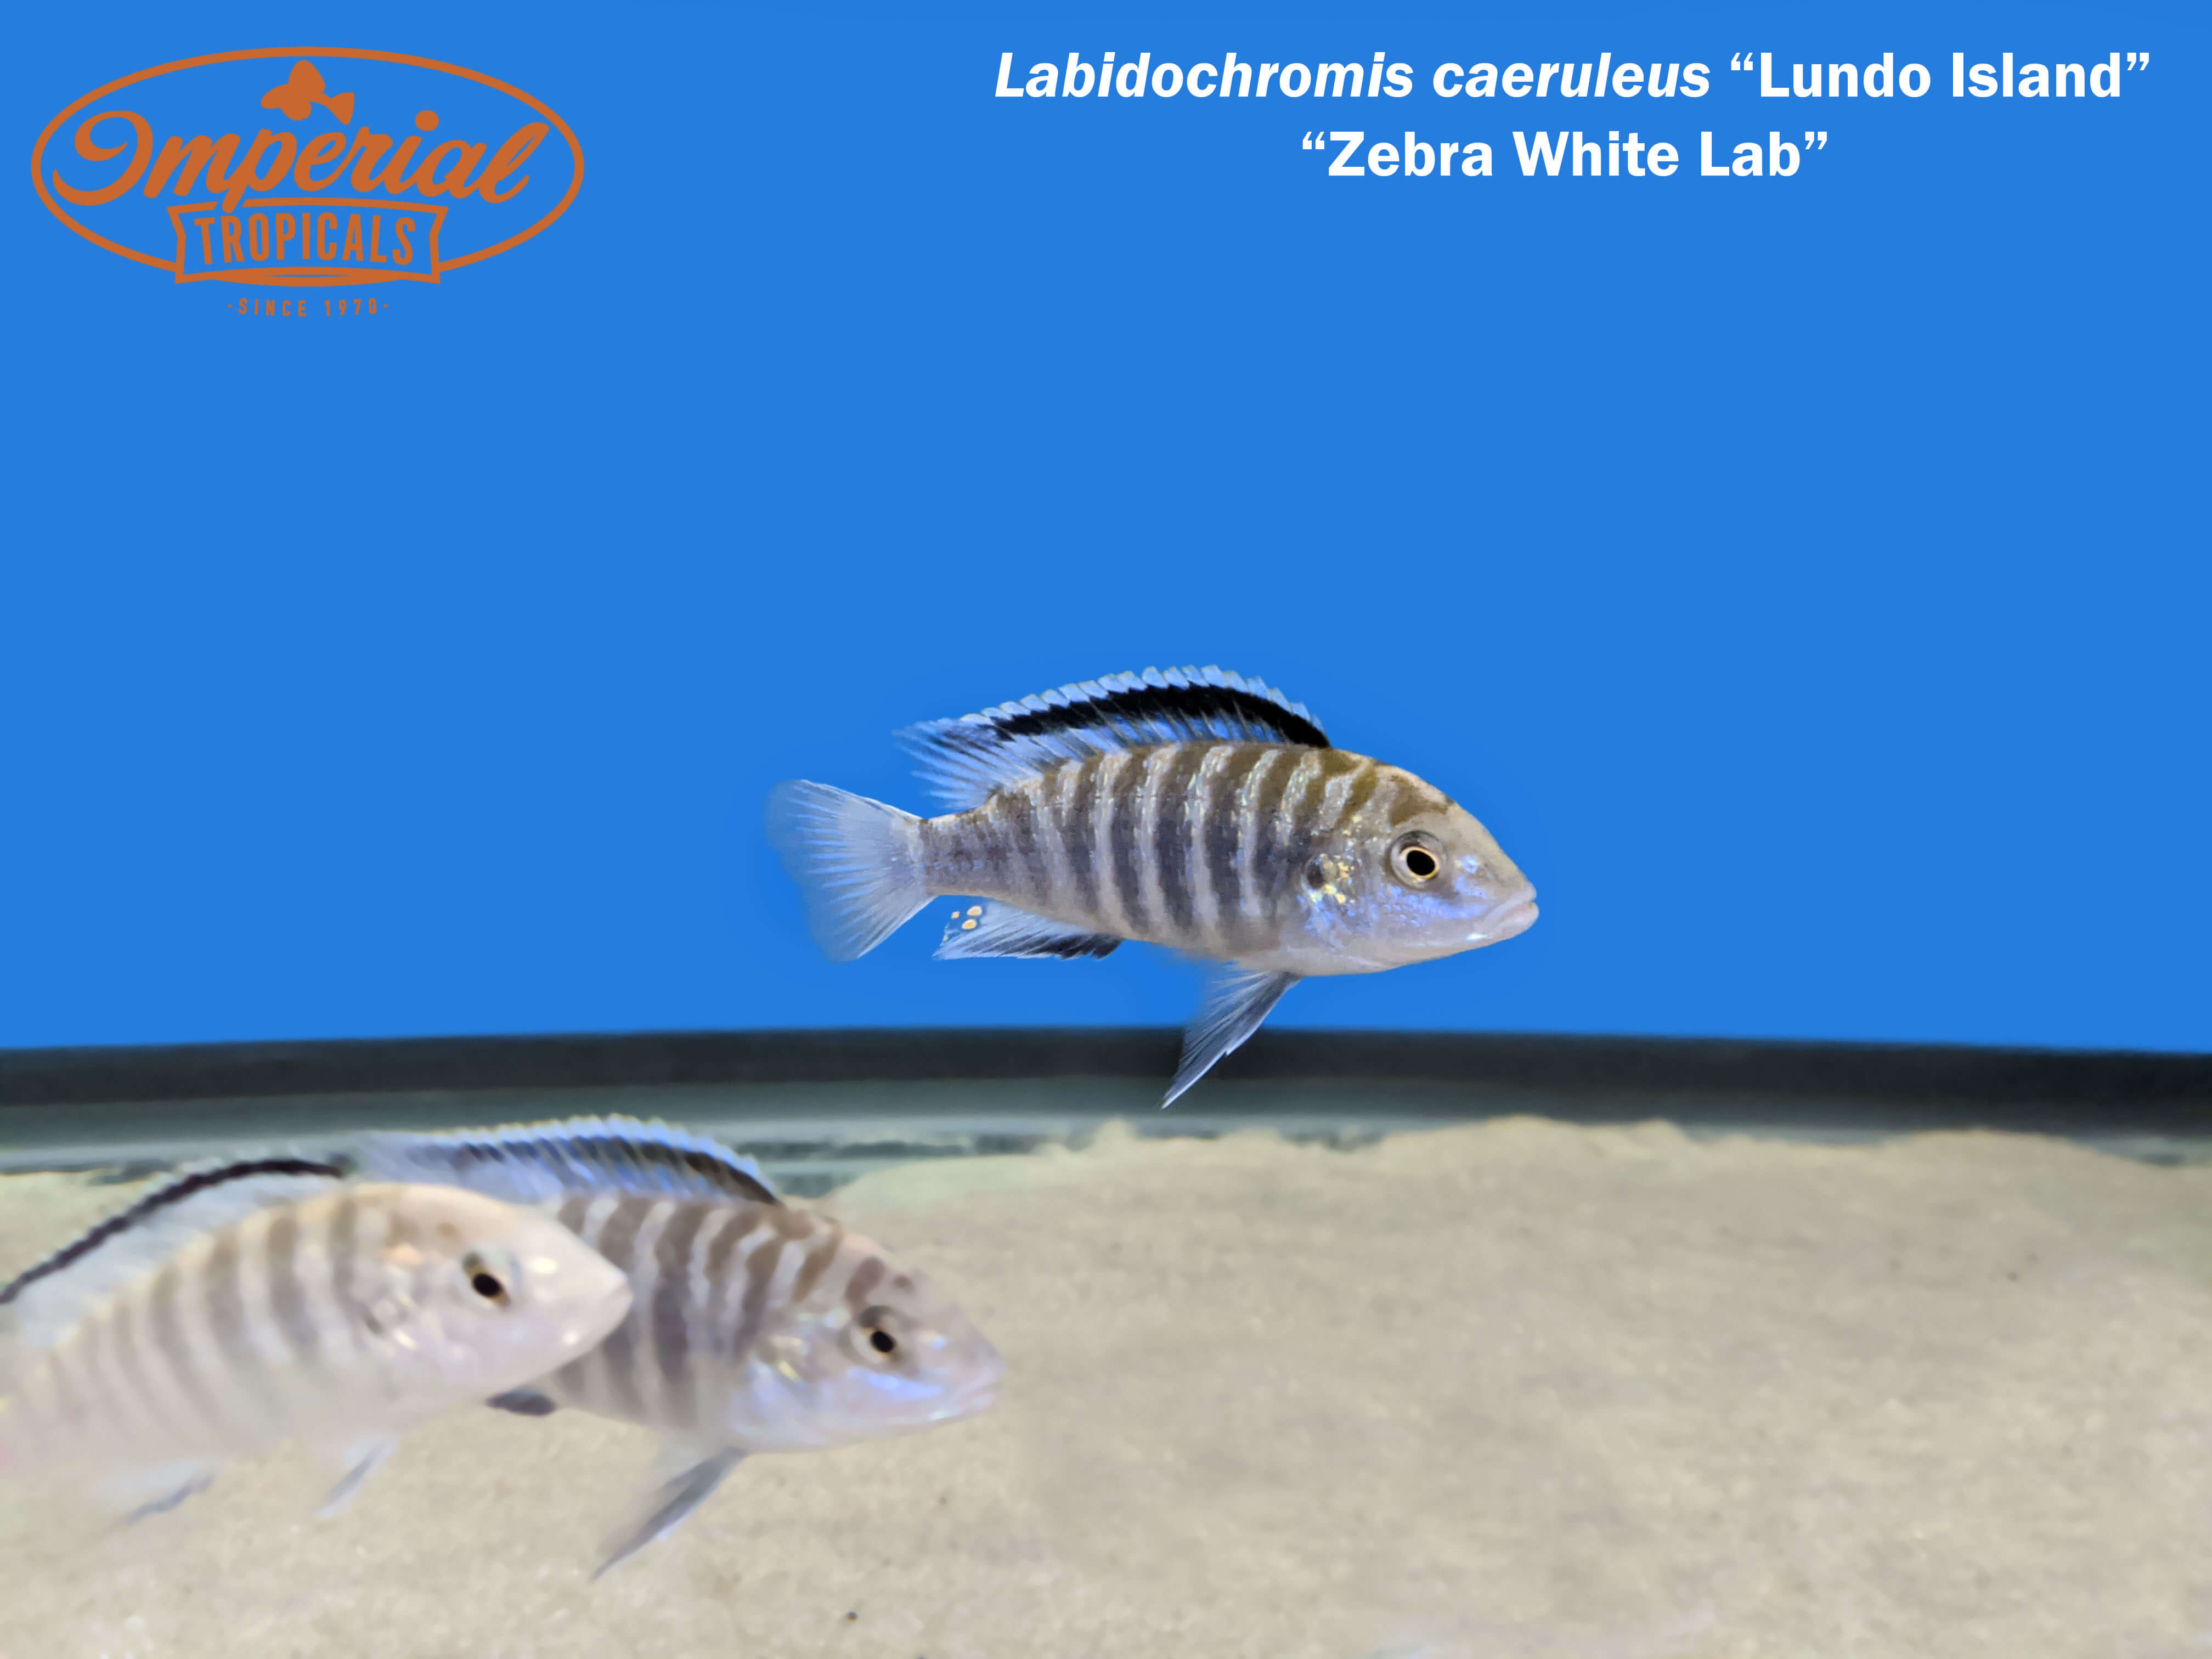 Zebra White Lab Lundo Island (Labidochromis caeruleus) - shop